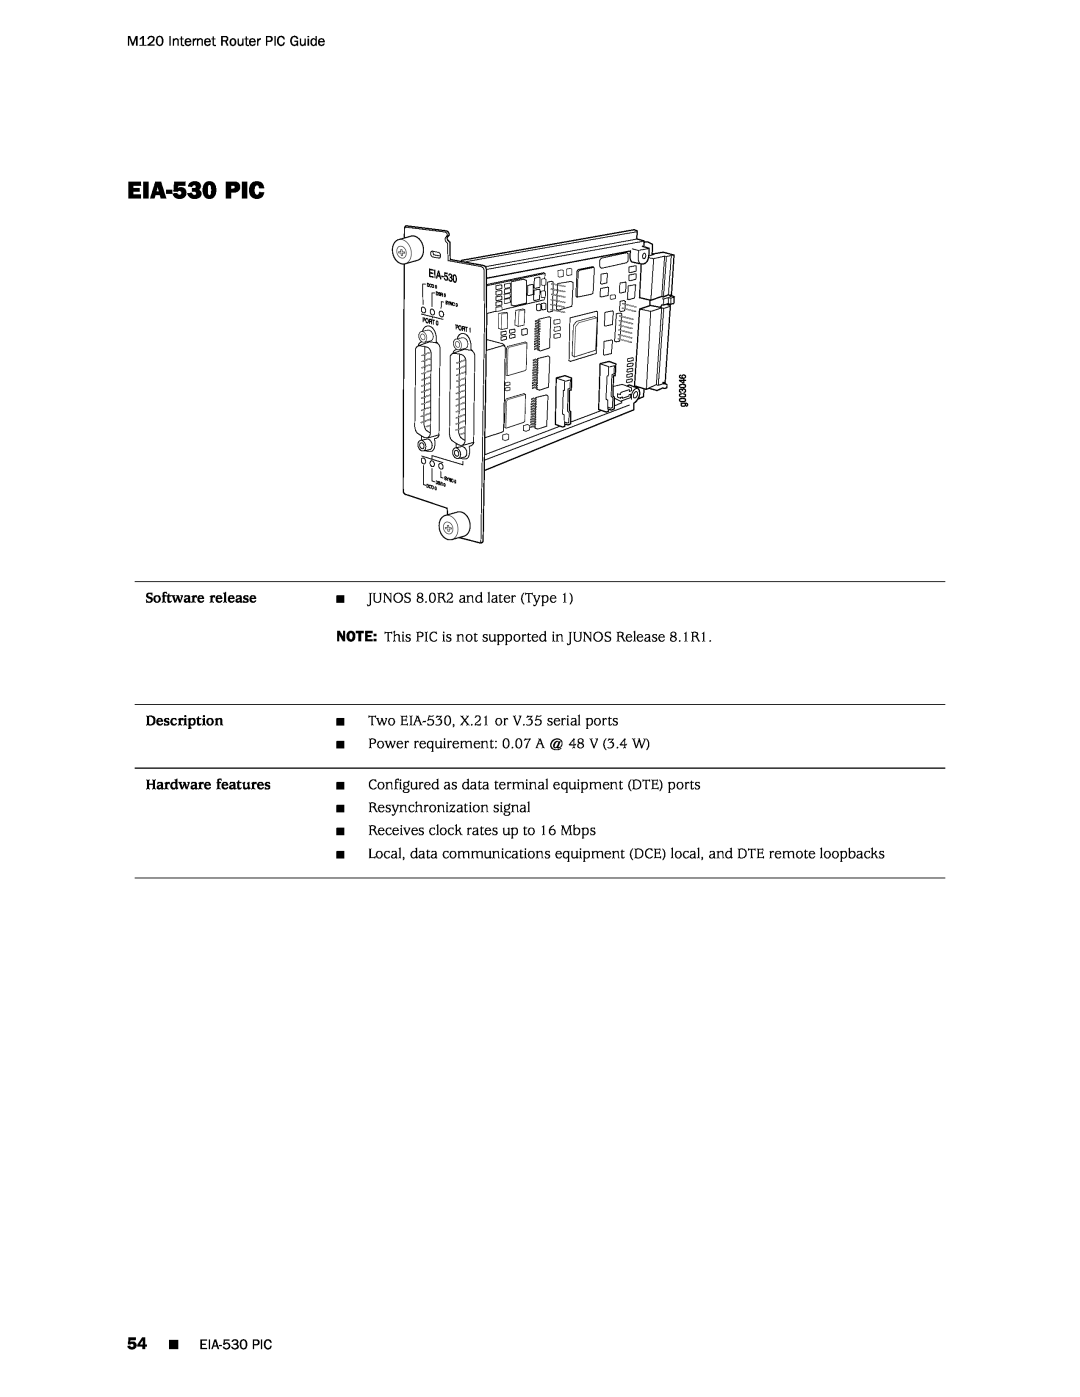 Juniper Networks M120 manual EIA-530 PIC, Software release, Description, Hardware features 